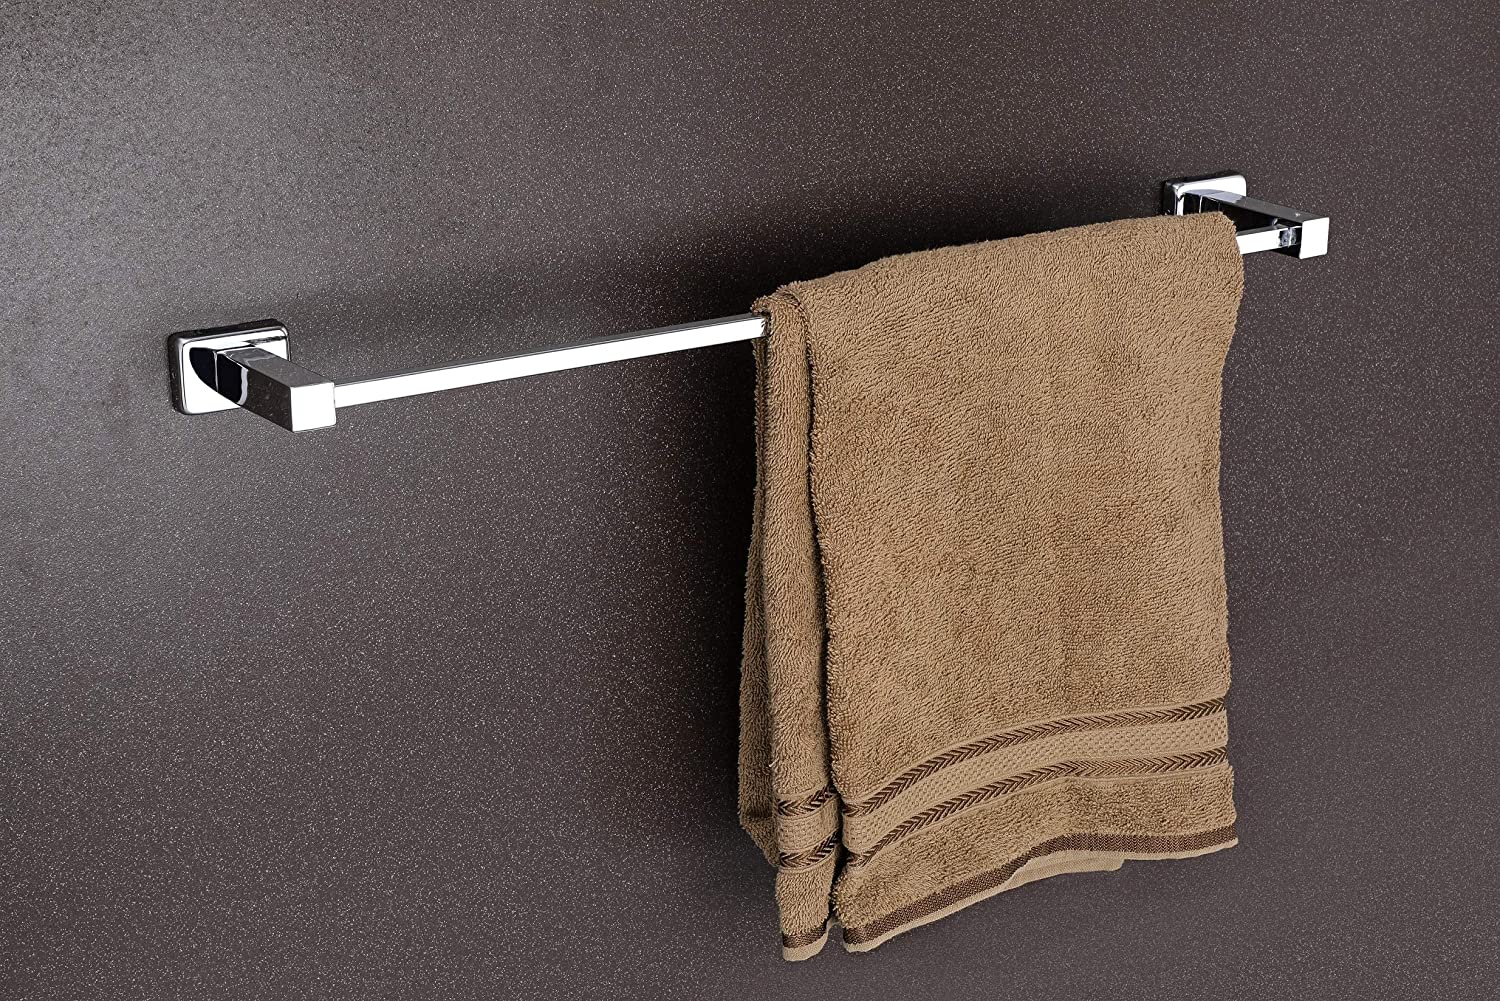 The Ultimate Heated Towel Rail